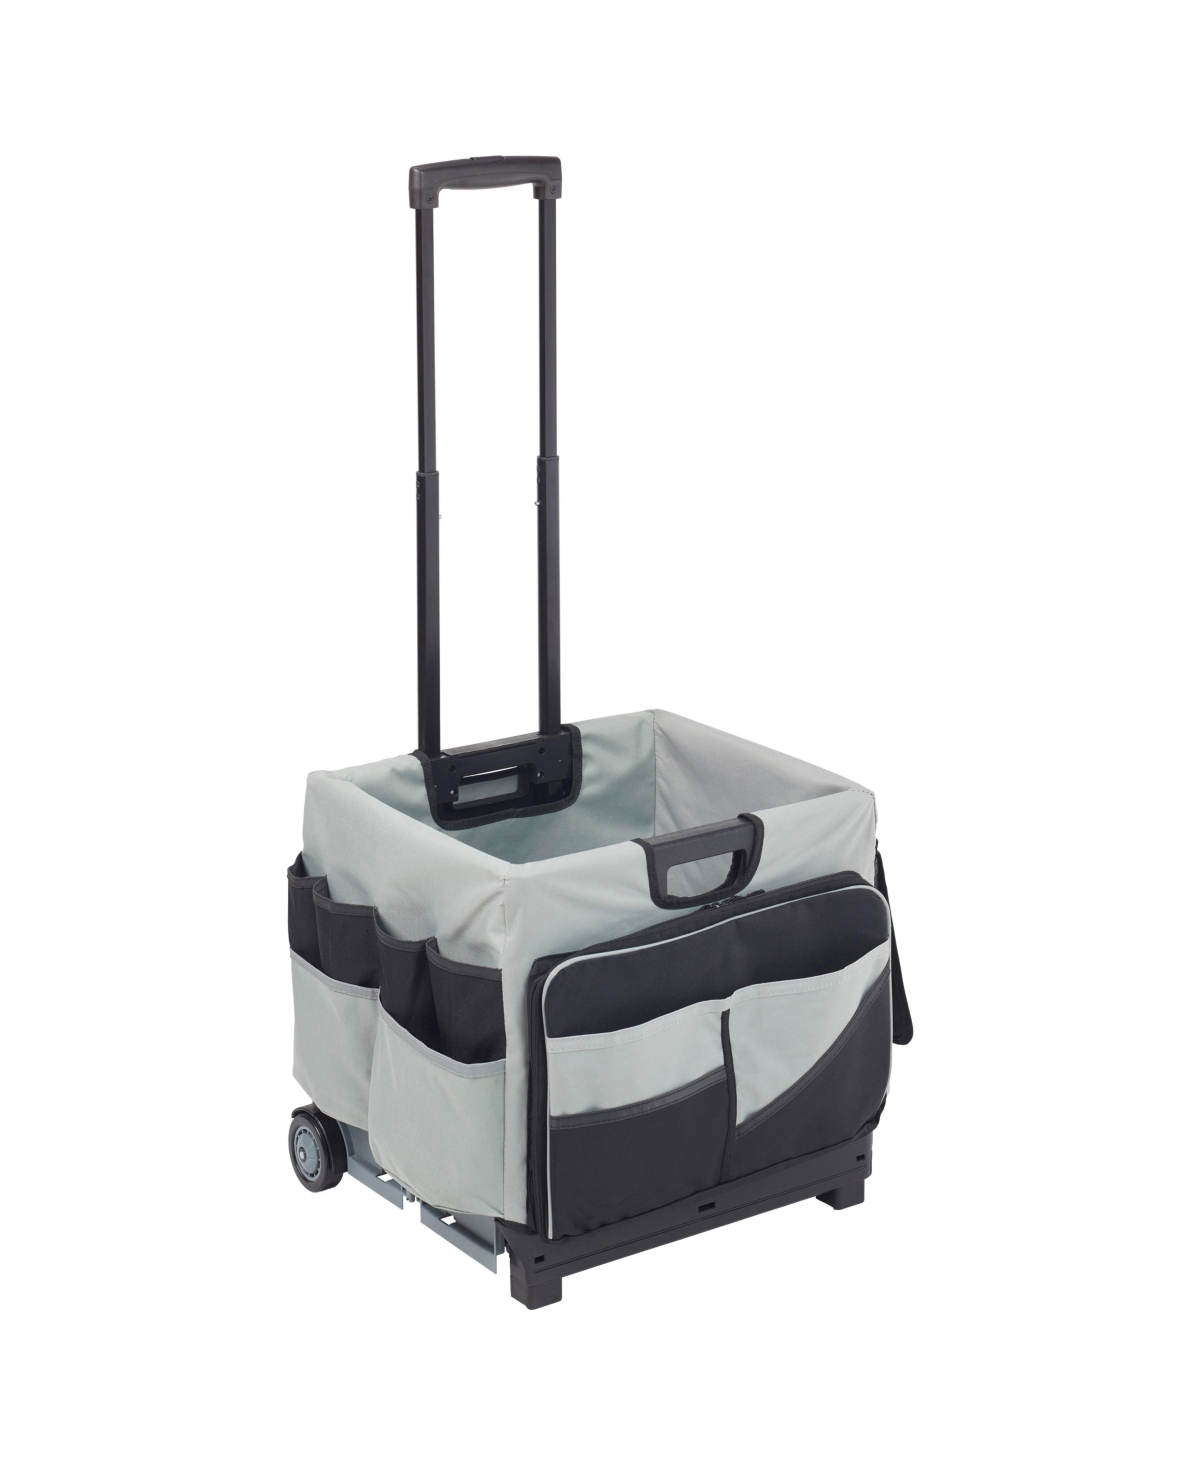 Universal Rolling Cart with Canvas Organizer Bag, Mobile Storage, Black - Black